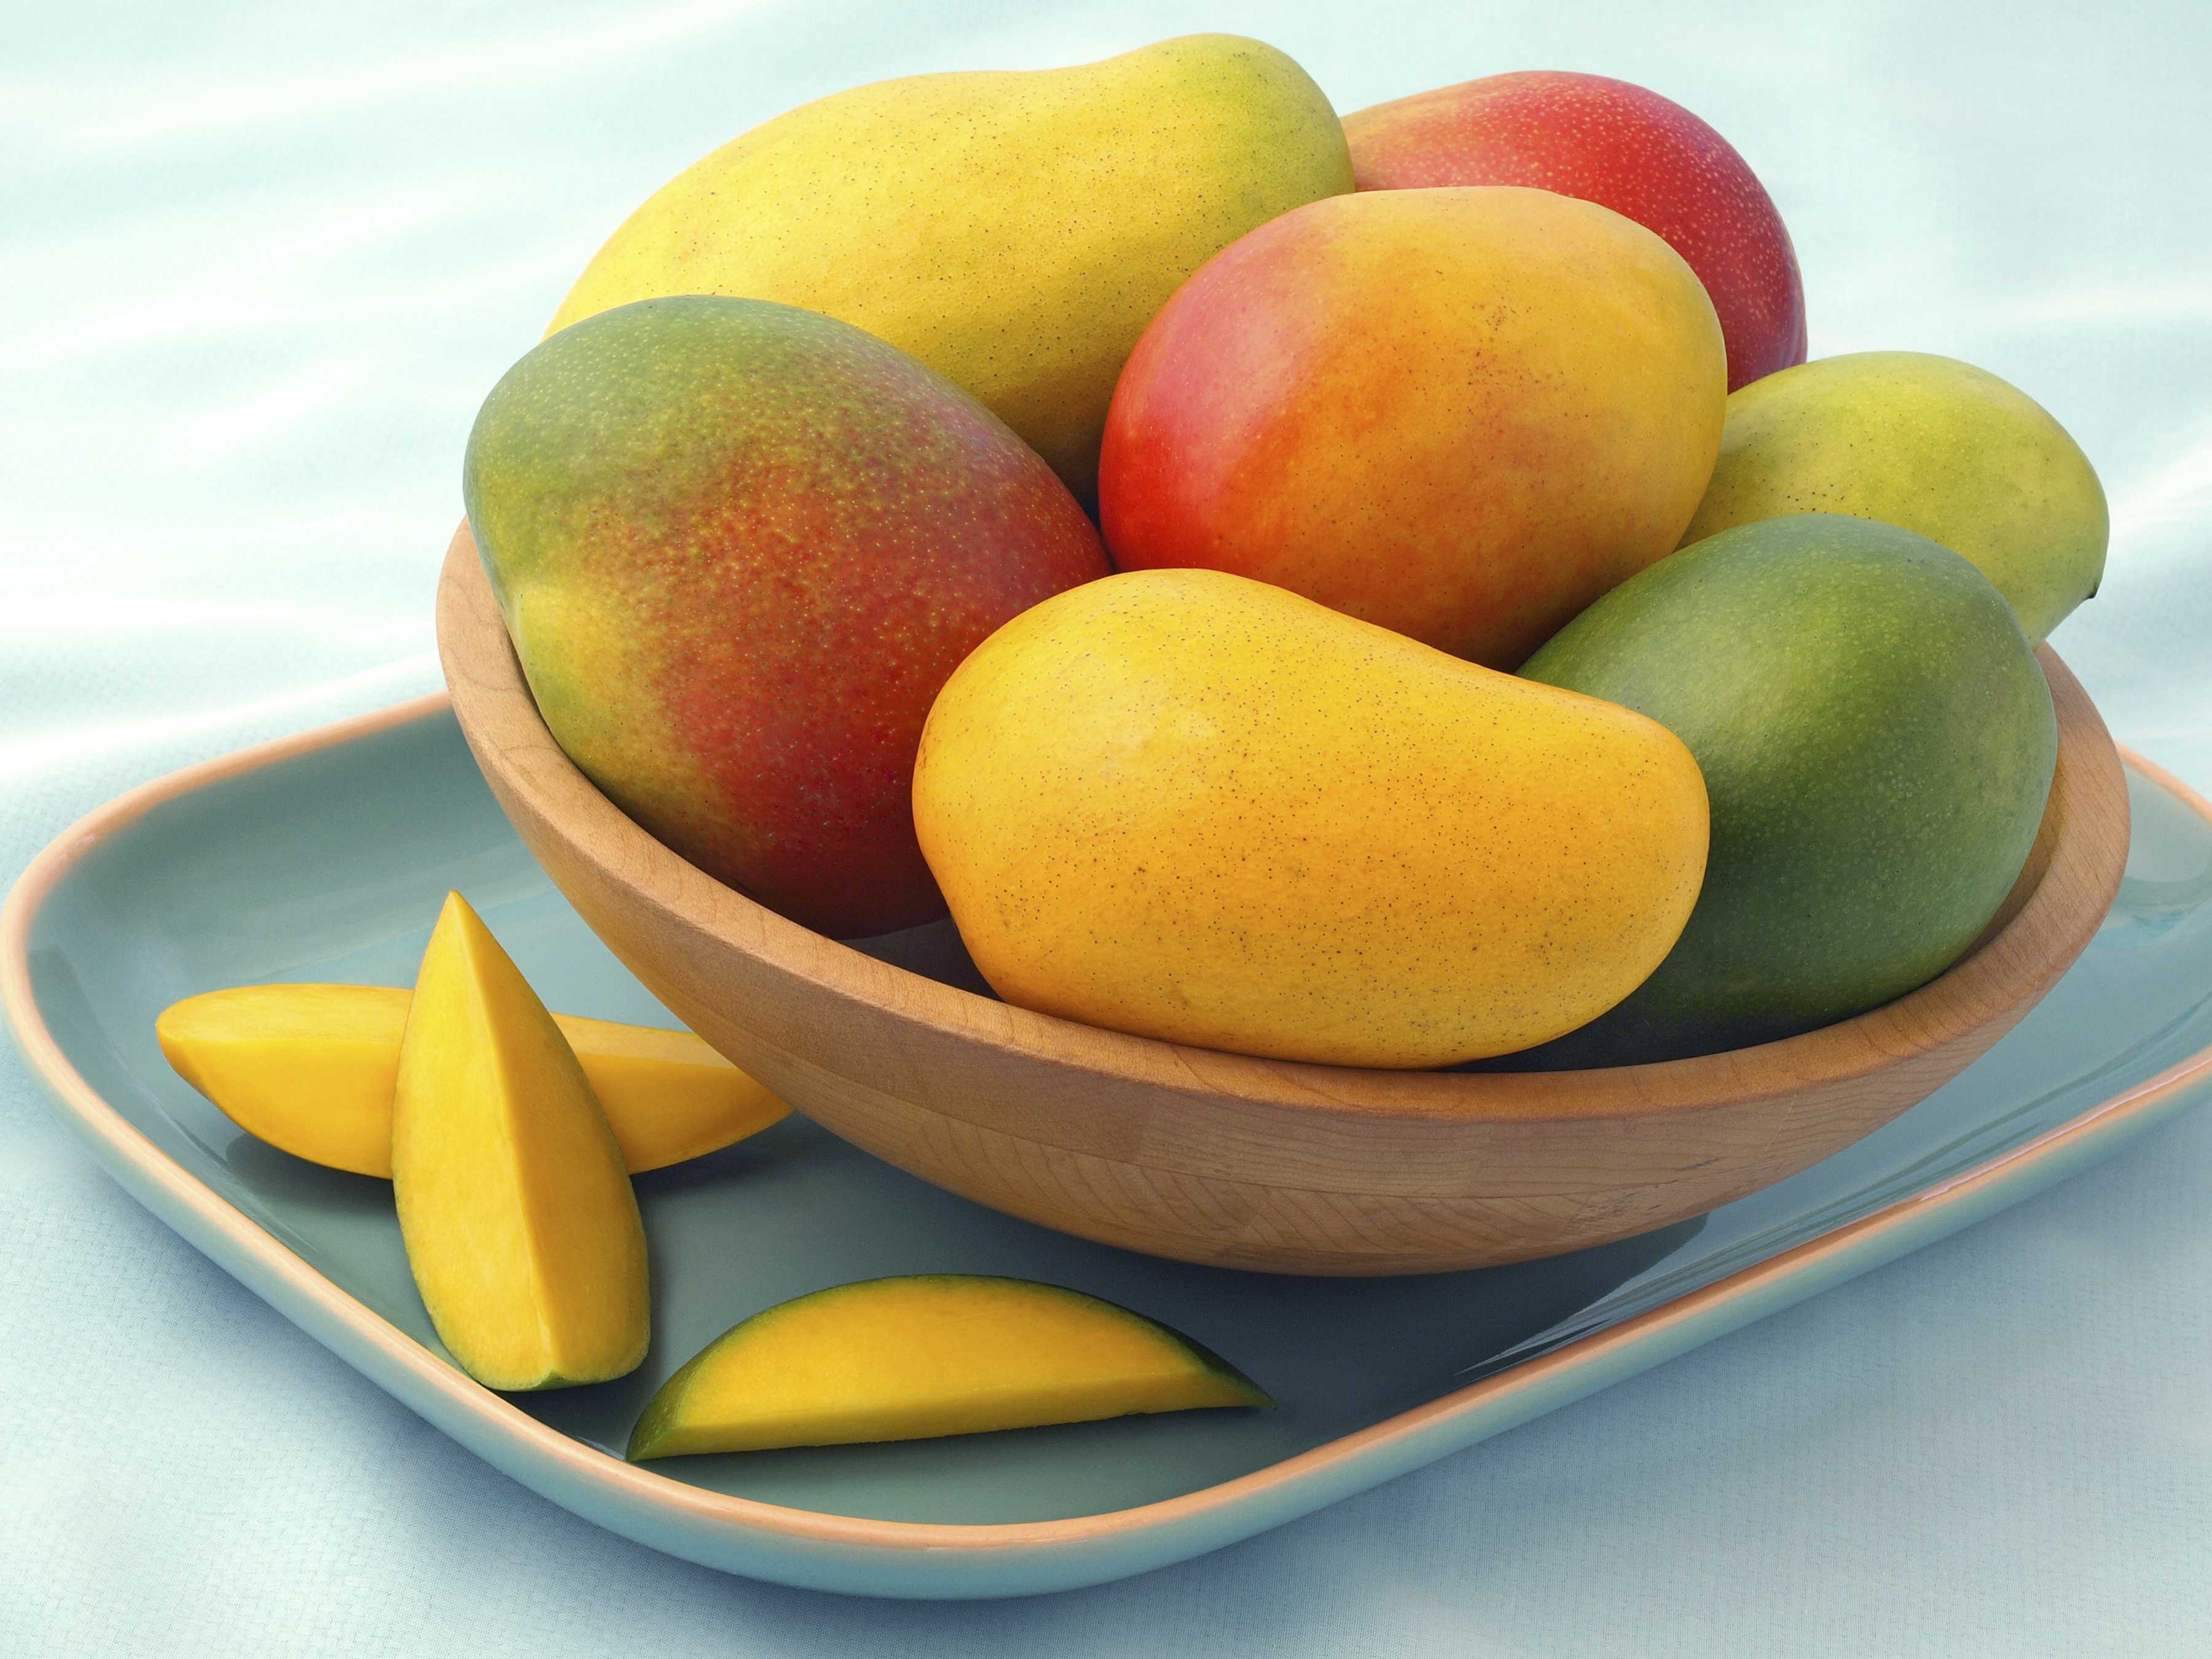 Host mango. Сорт манго Авис. Манго сорт Лангра. Плод манго. Манго в Индии.